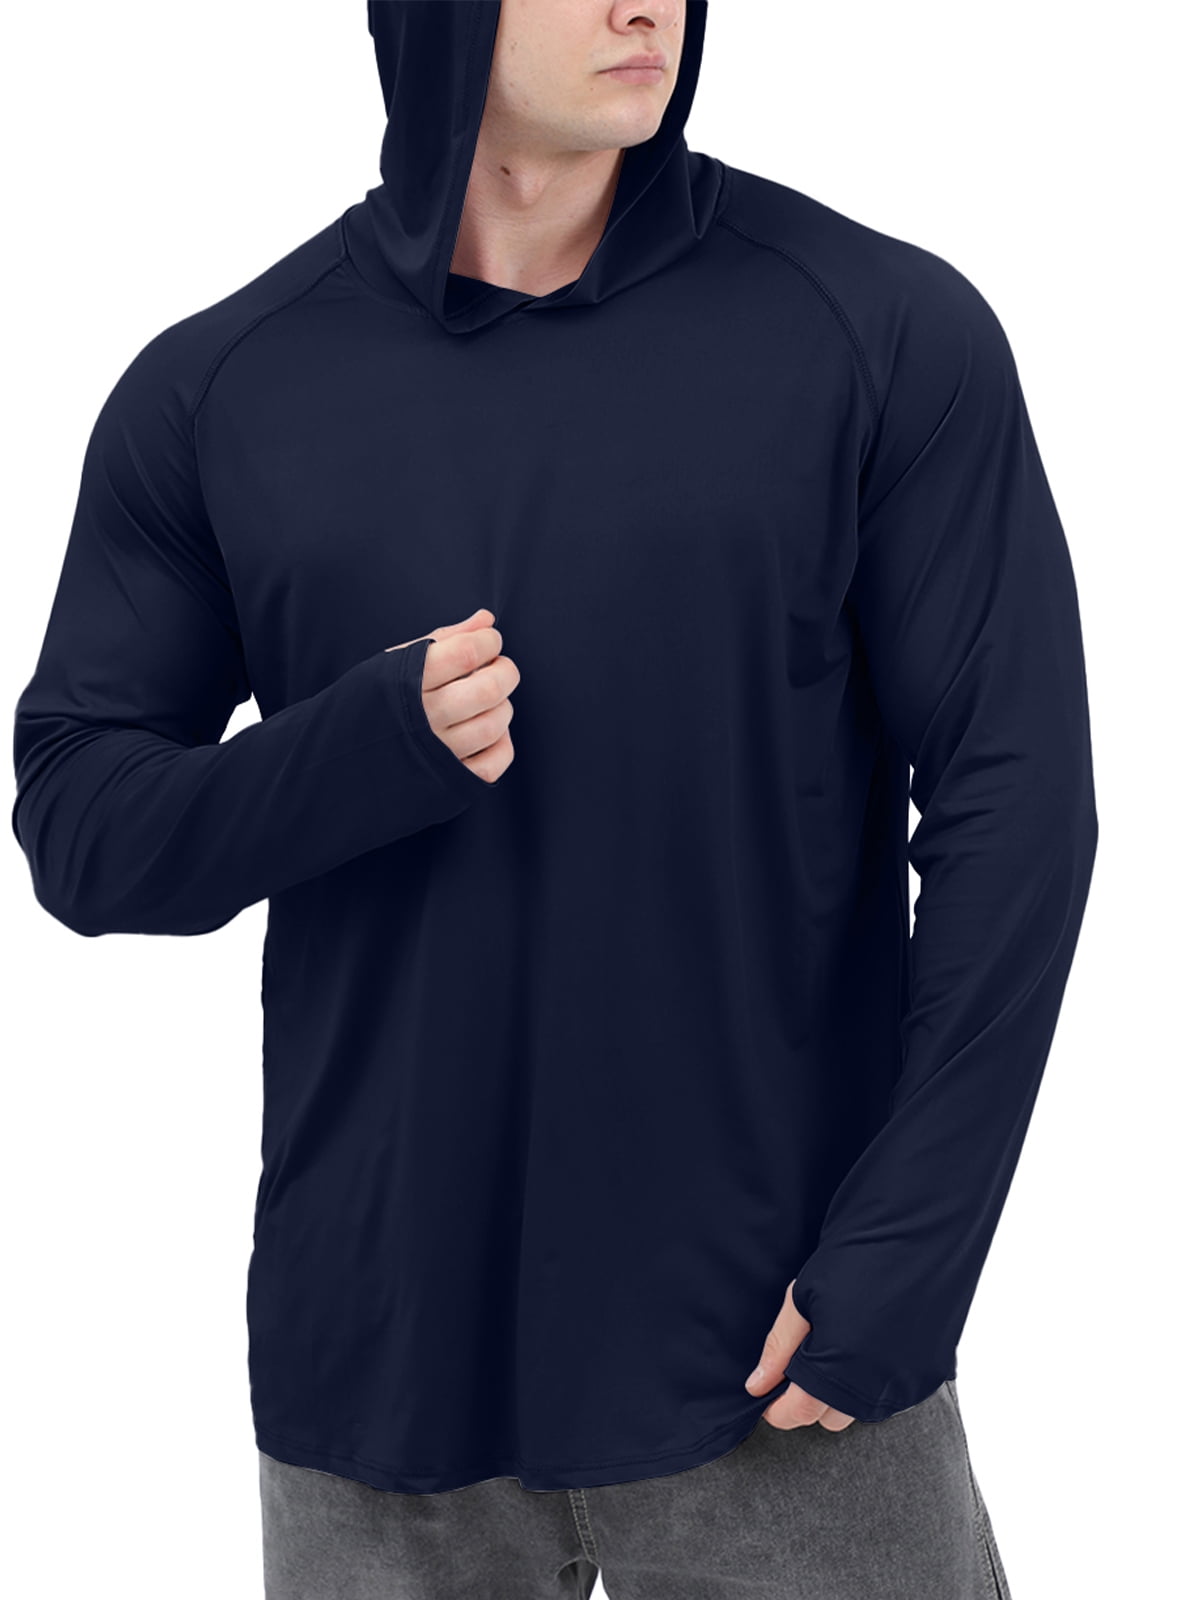 Hody Lovy Sun Protection Hoodie Jackets UV Clothing UPF 50+ Long Sleeve Shirts Hiking Golf Fishing Lightweight Quick Dry